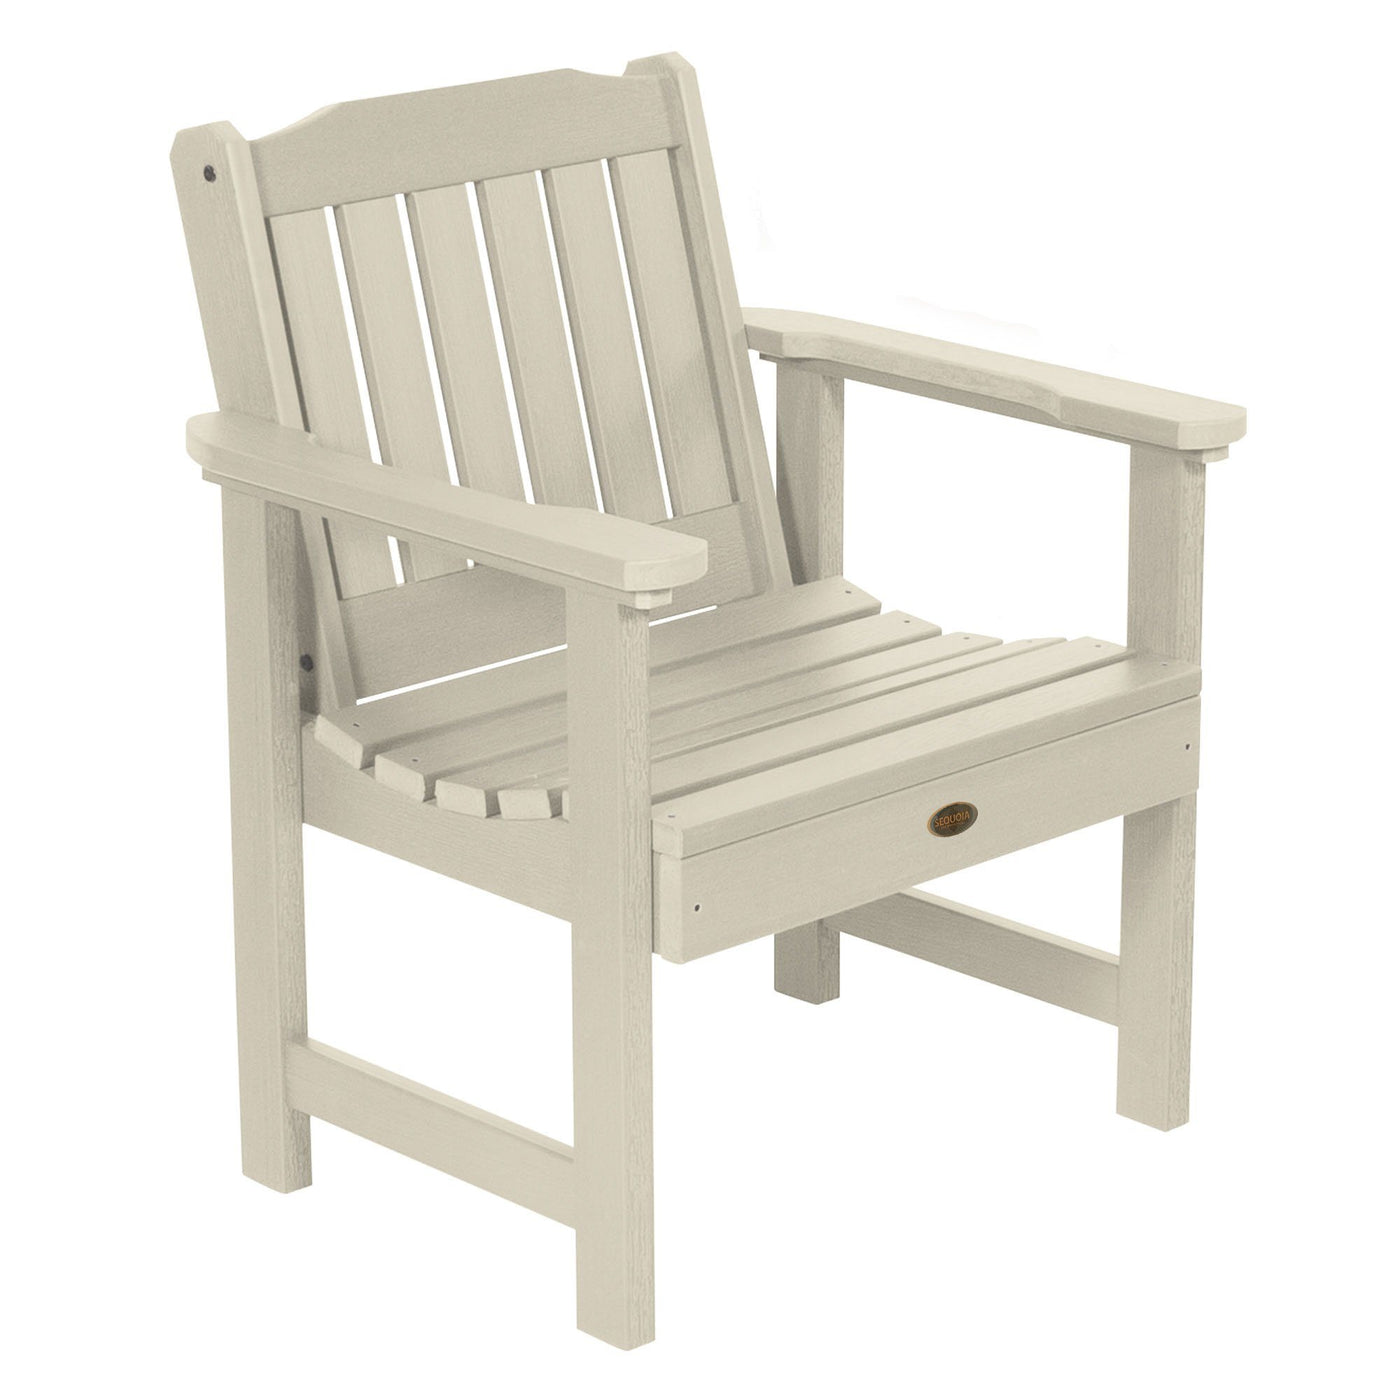 Commercial Grade "Springville" Lounge Chair Sequoia Professional Whitewash 